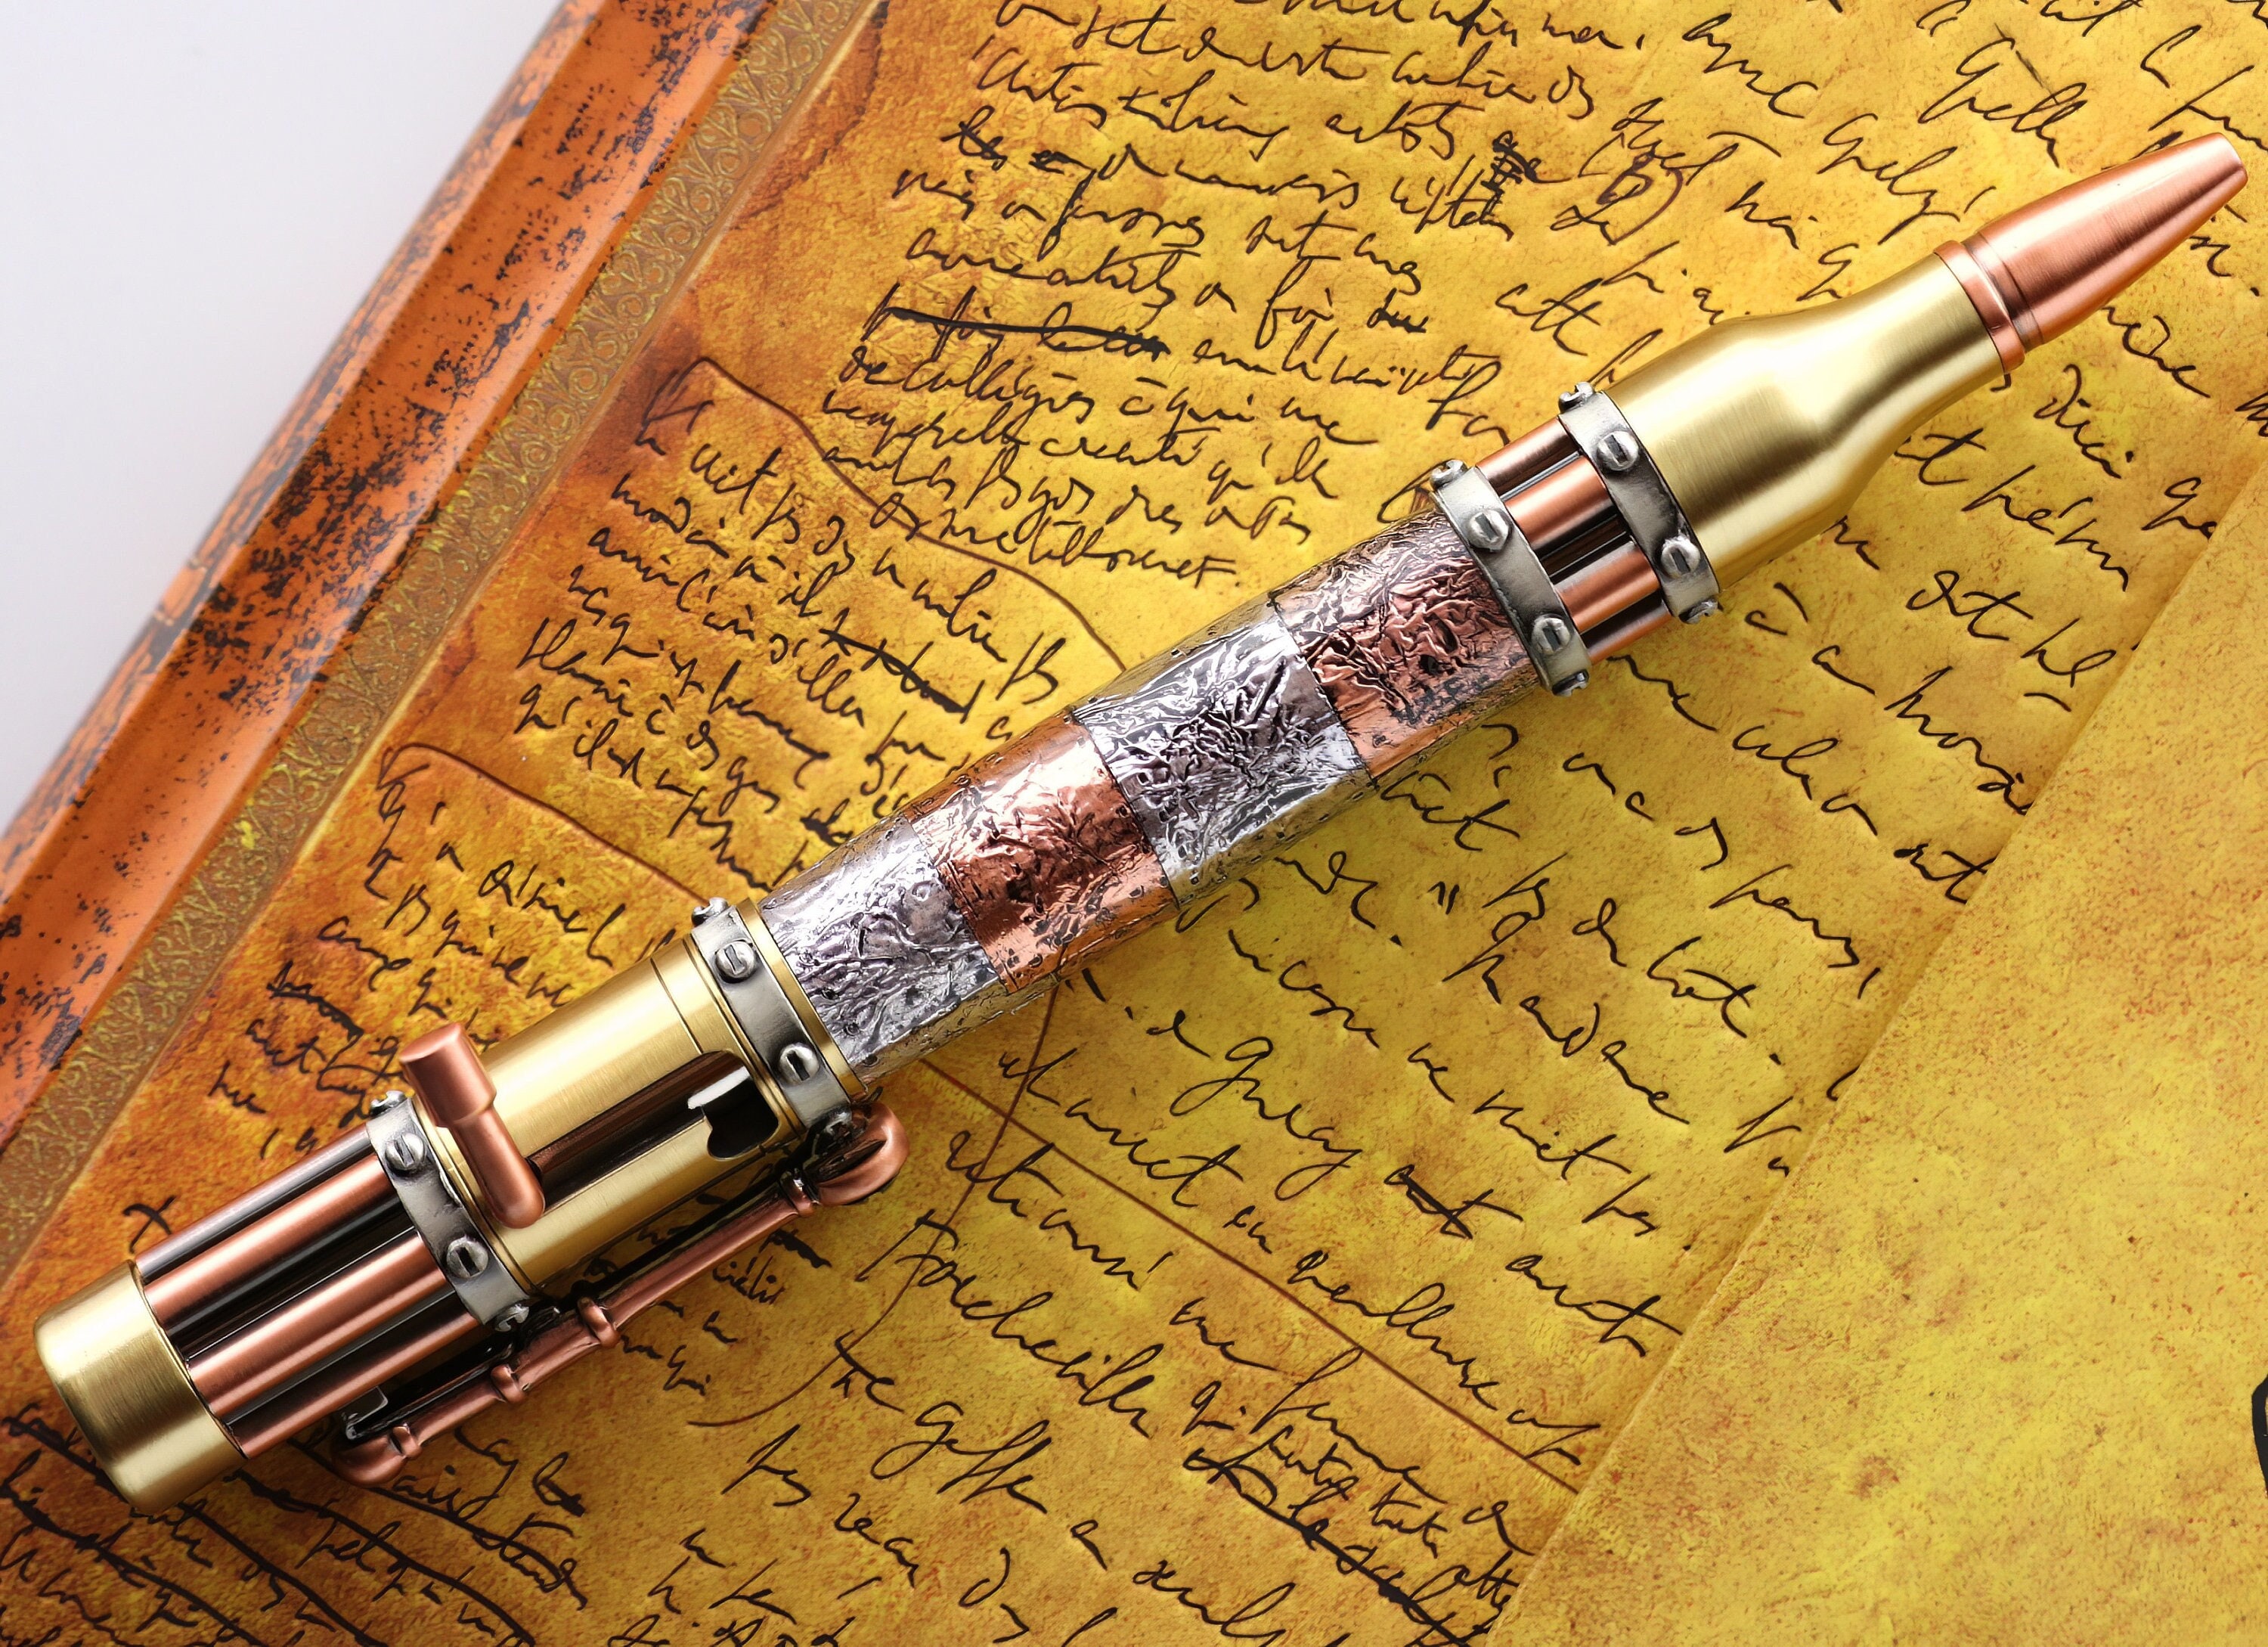 Quill Pen Calligraphy Pen Set - Antique Mechanical Steampunk Style